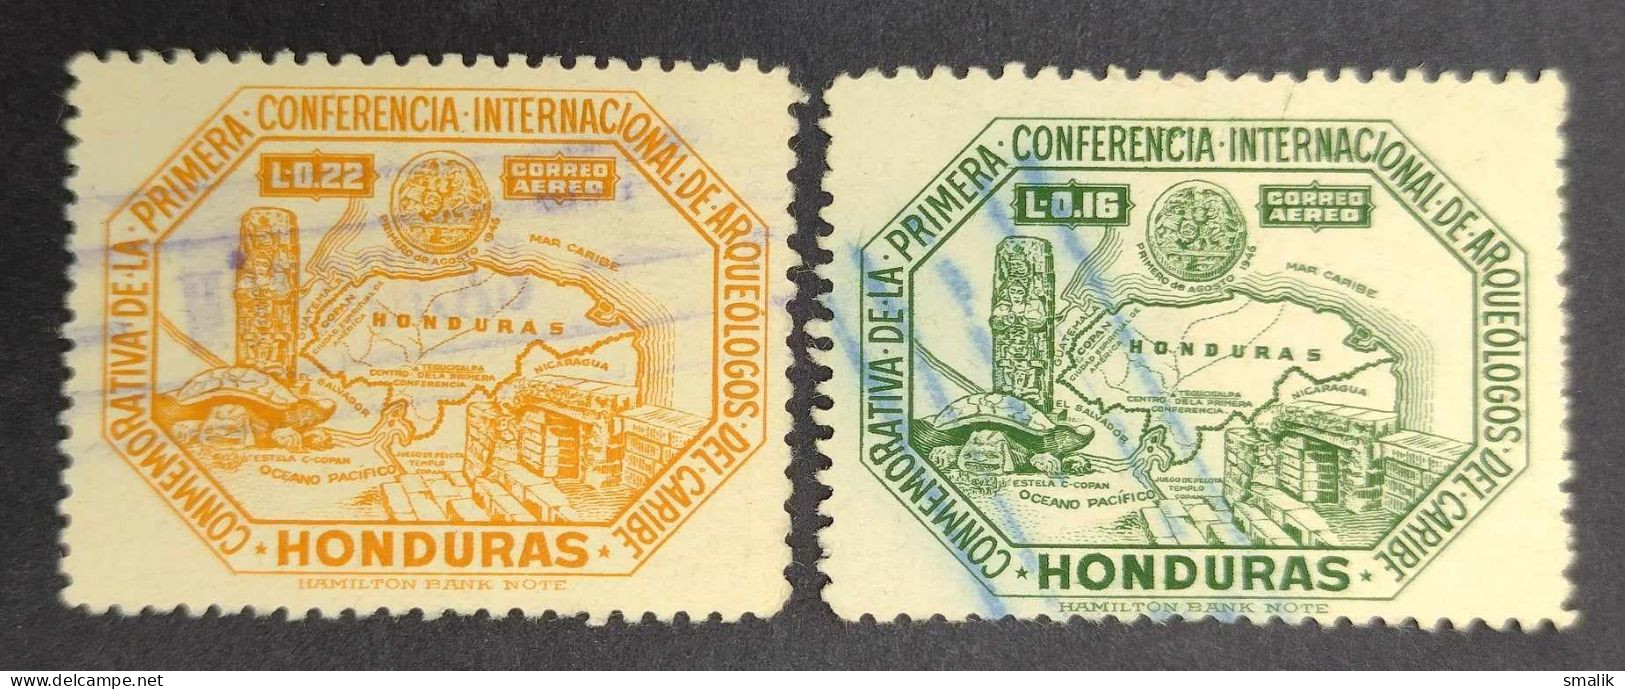 HONDURAS 1947 - Archaeological Congress, Map, 2 Stamps Fine Used - Honduras